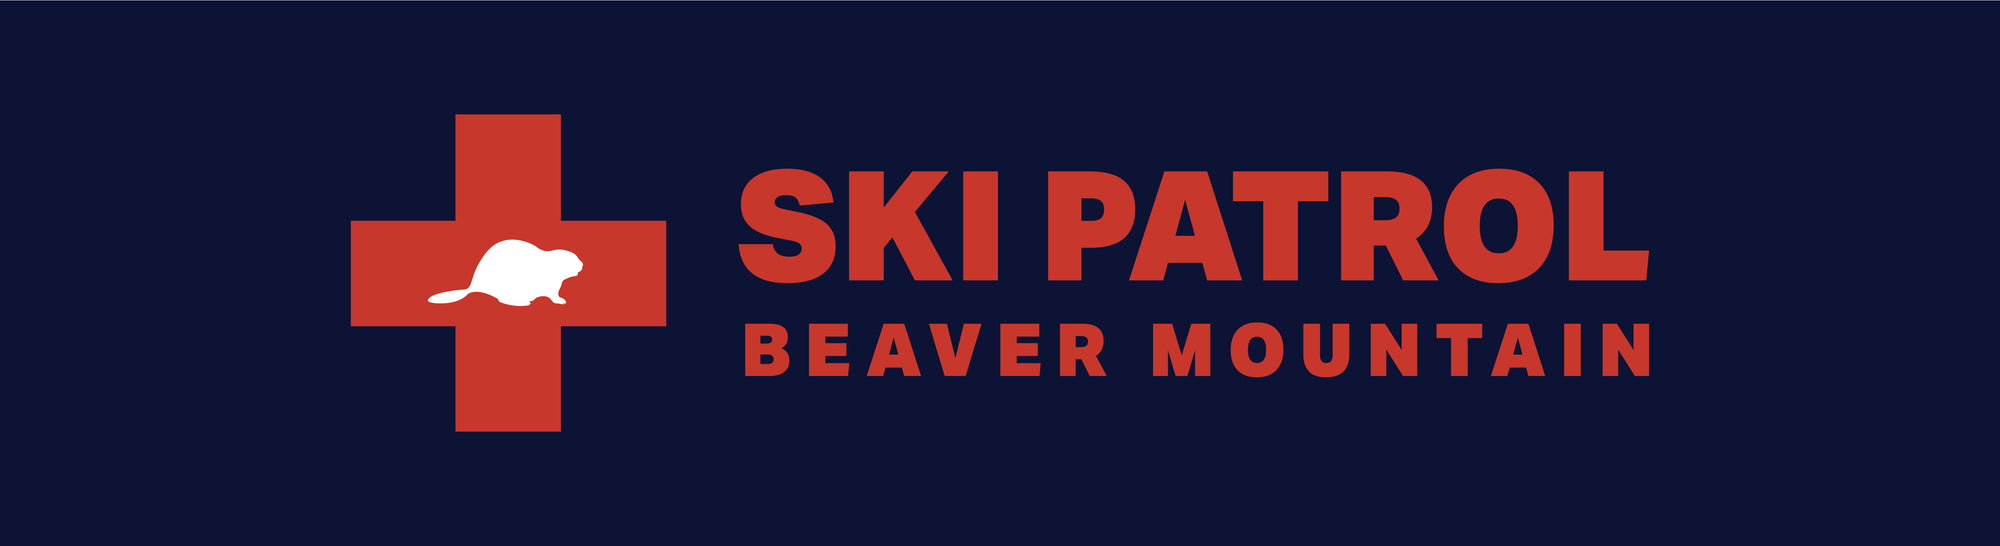 Beaver Mountain Ski Patrol